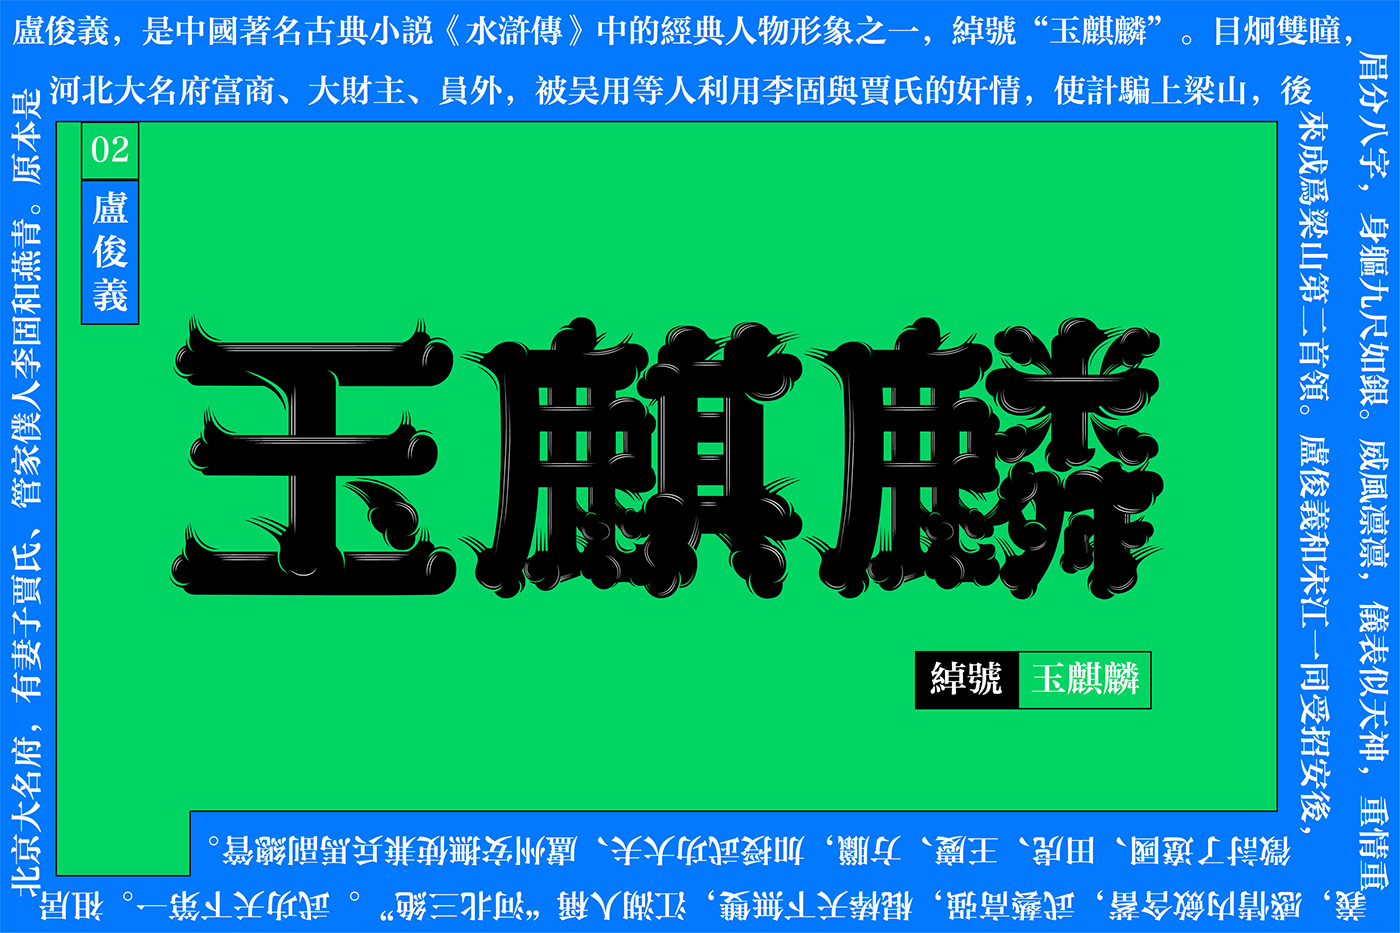 font font design graphic Typeface 图形 字体 字体设计 排版 水浒传 汉字